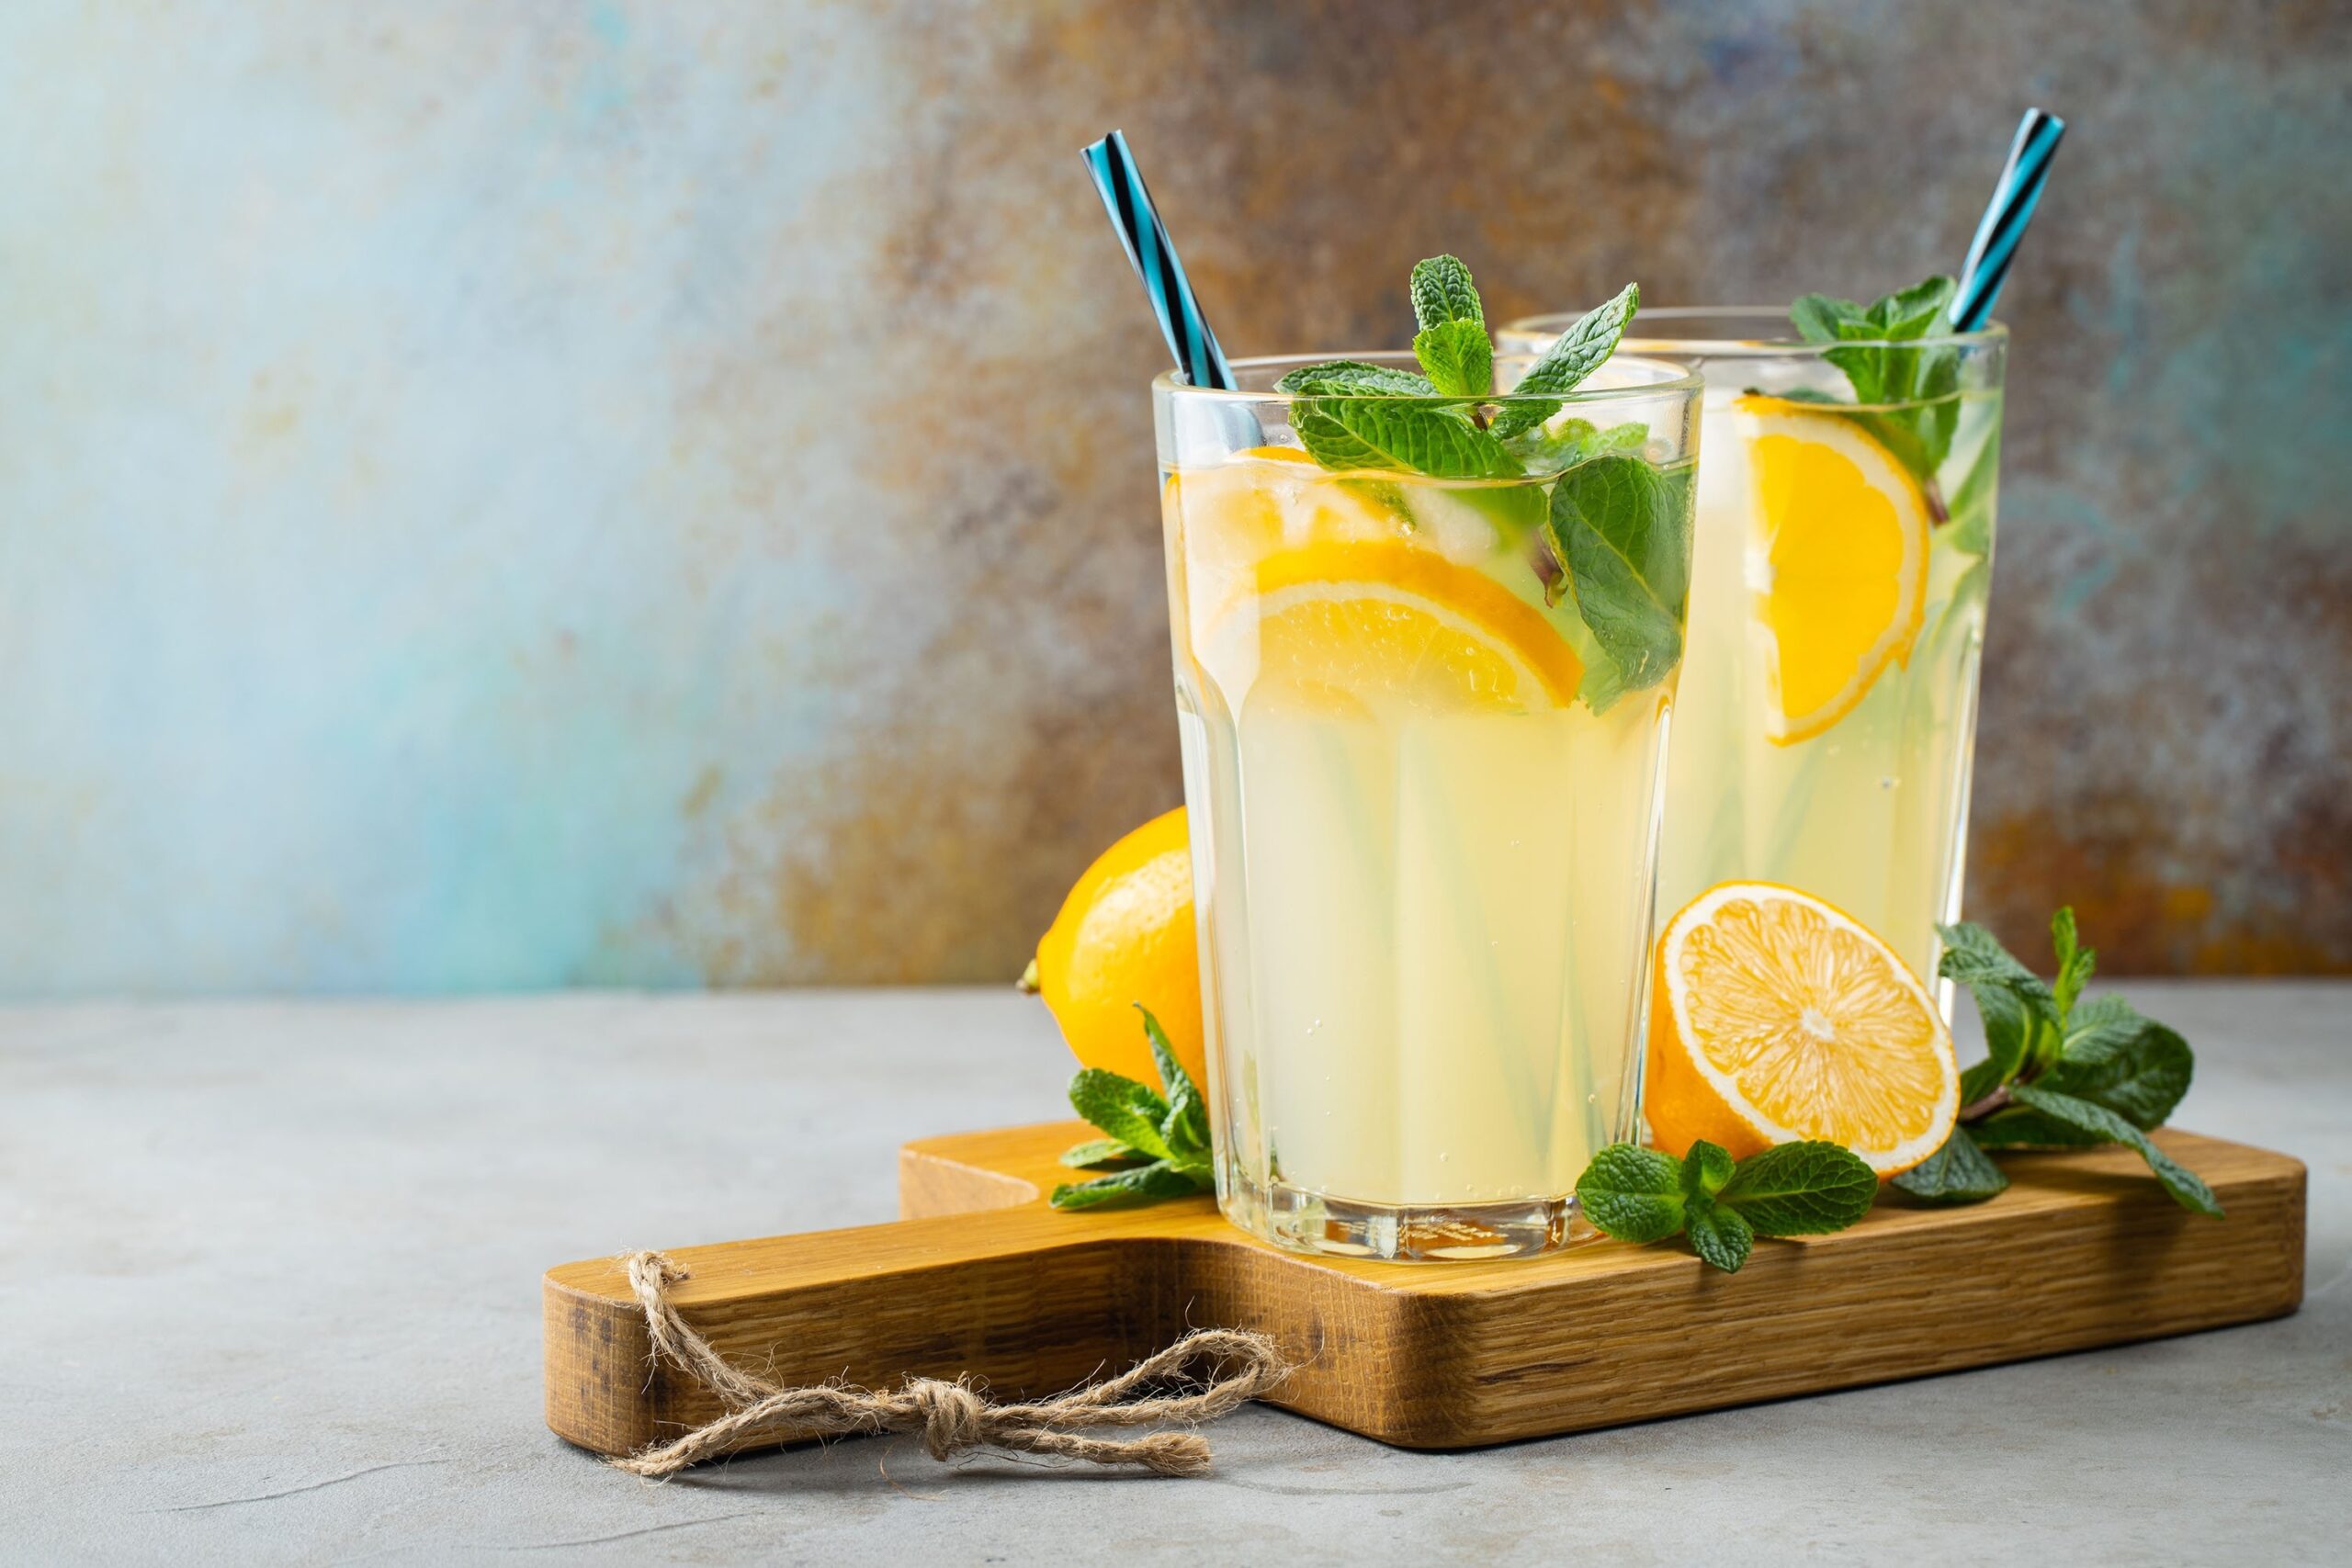 Mint Lemonade - Refreshing Summer Drinking